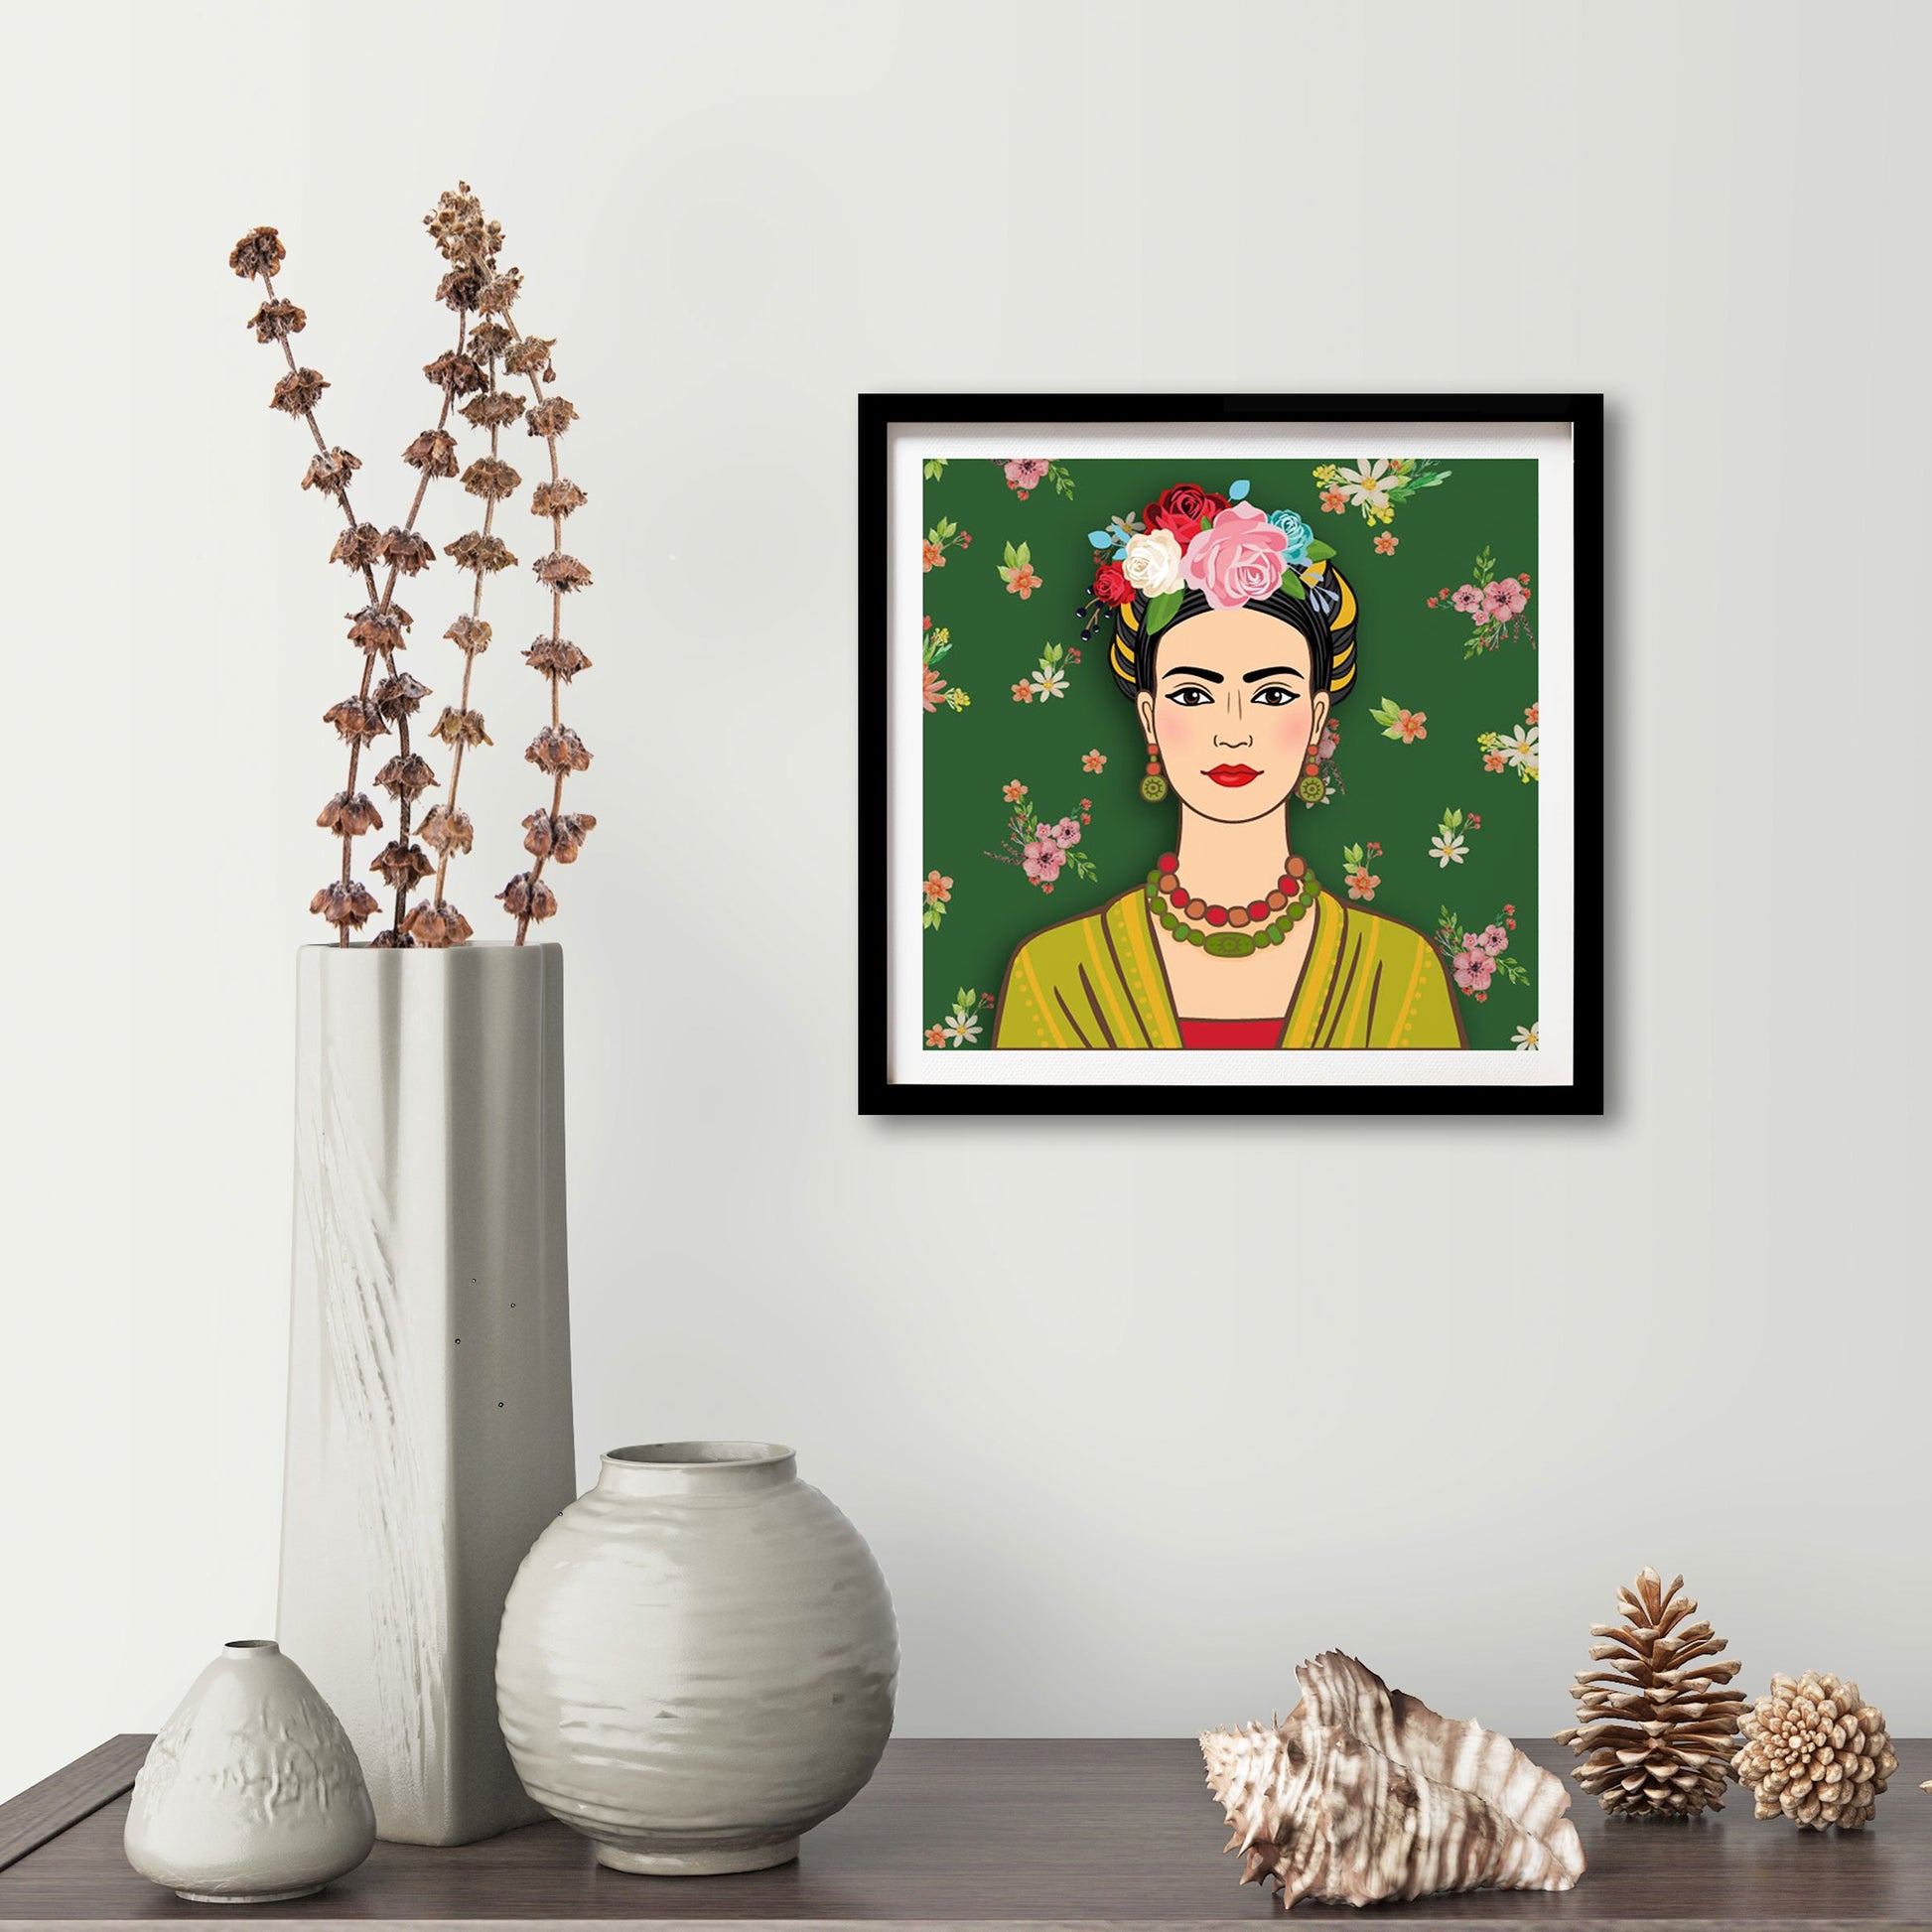 Frida Kahlo Artwork Painting - Meri Deewar - MeriDeewar